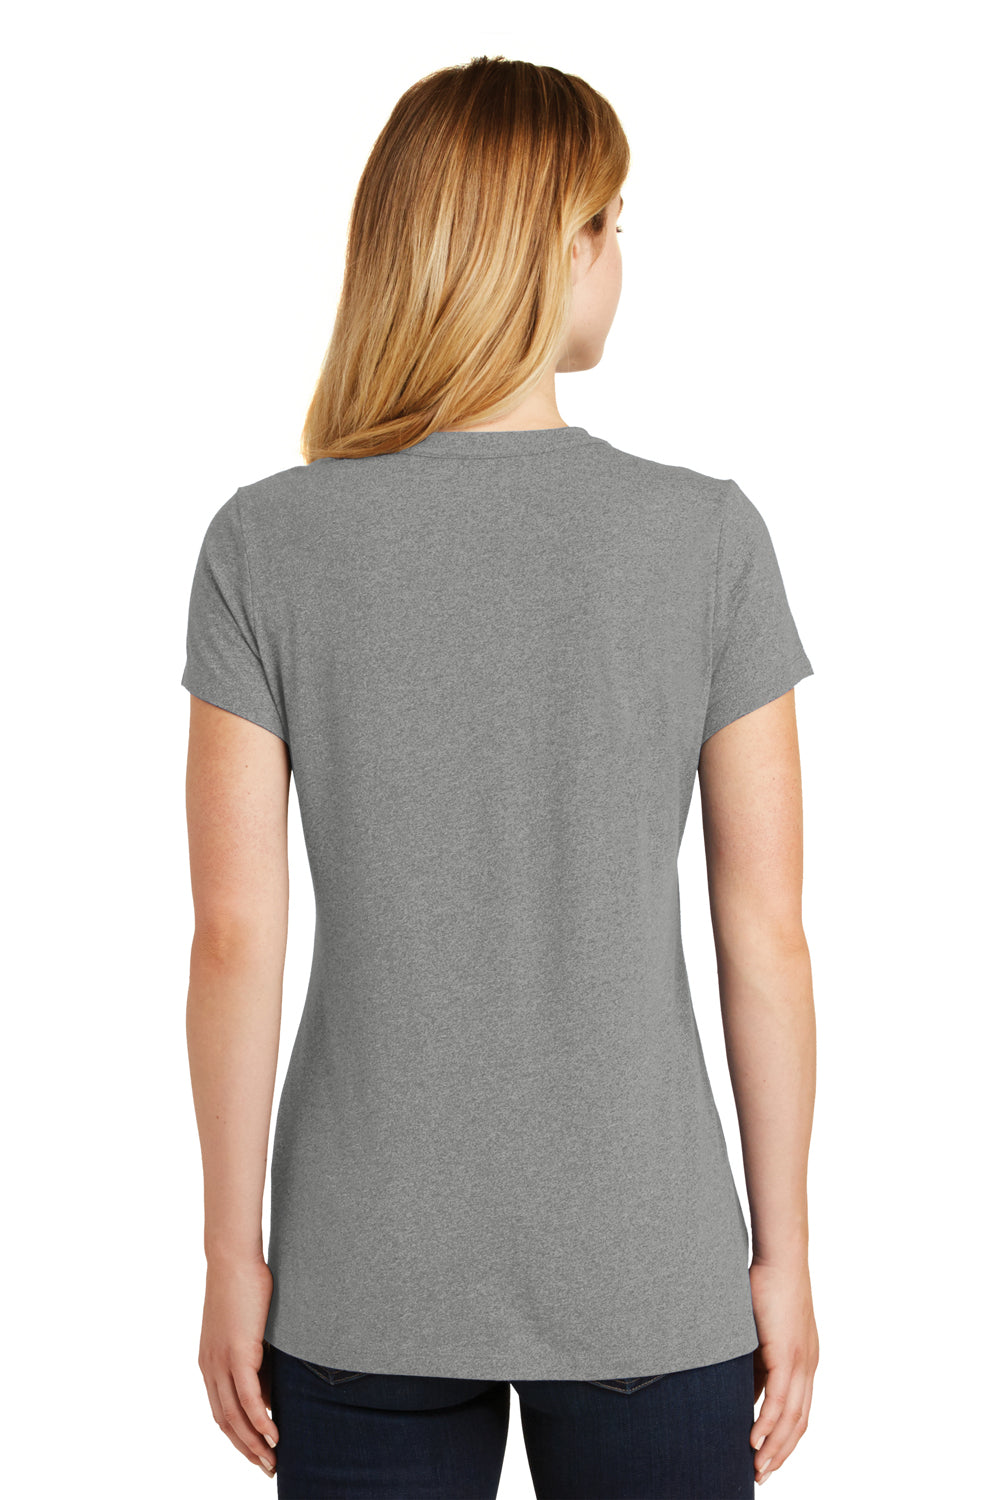 New Era LNEA100 Womens Heritage Short Sleeve Crewneck T-Shirt Heather Shadow Grey Back